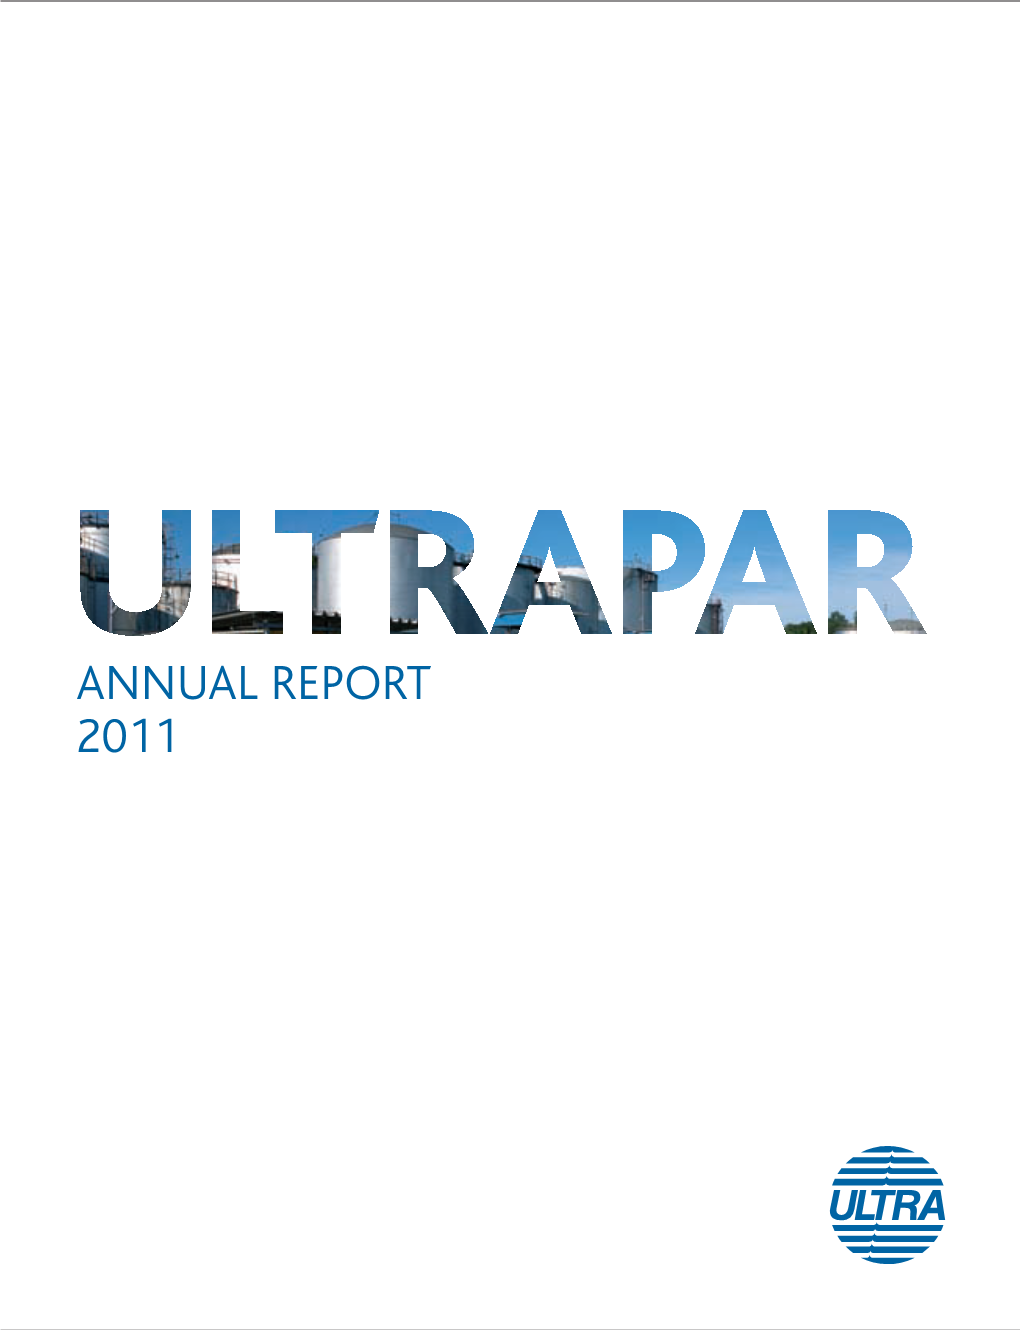 ANNUAL REPORT 2011 ULTRAPAR ﬂoor Th Invest@Ultra.Com.Br Fax 55 11 3177 6107 Fax Phone 55 11 3177 7014 Phone Ultrapar Participações S